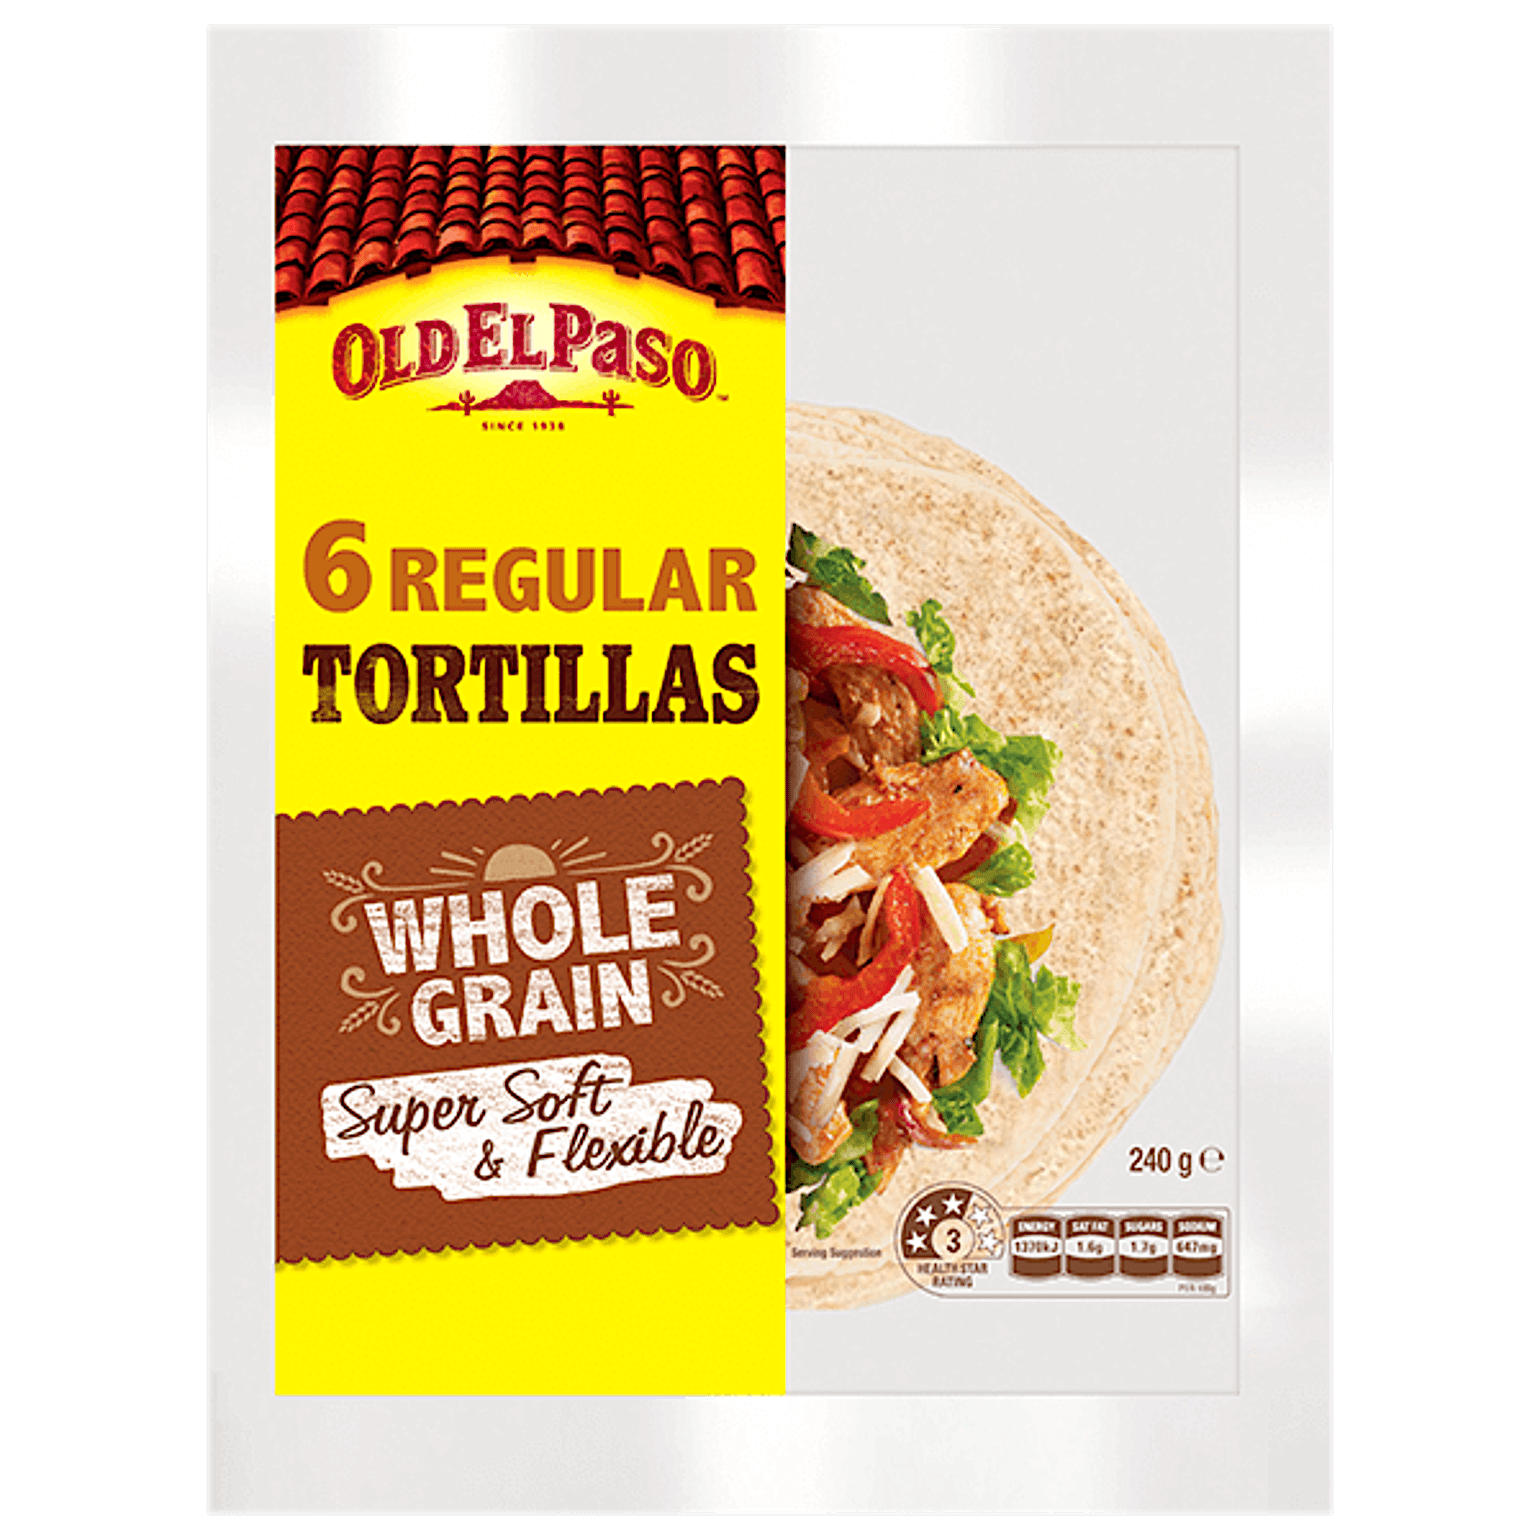 a pack of Old El Paso's 6 regular whole grain tortillas (240g)